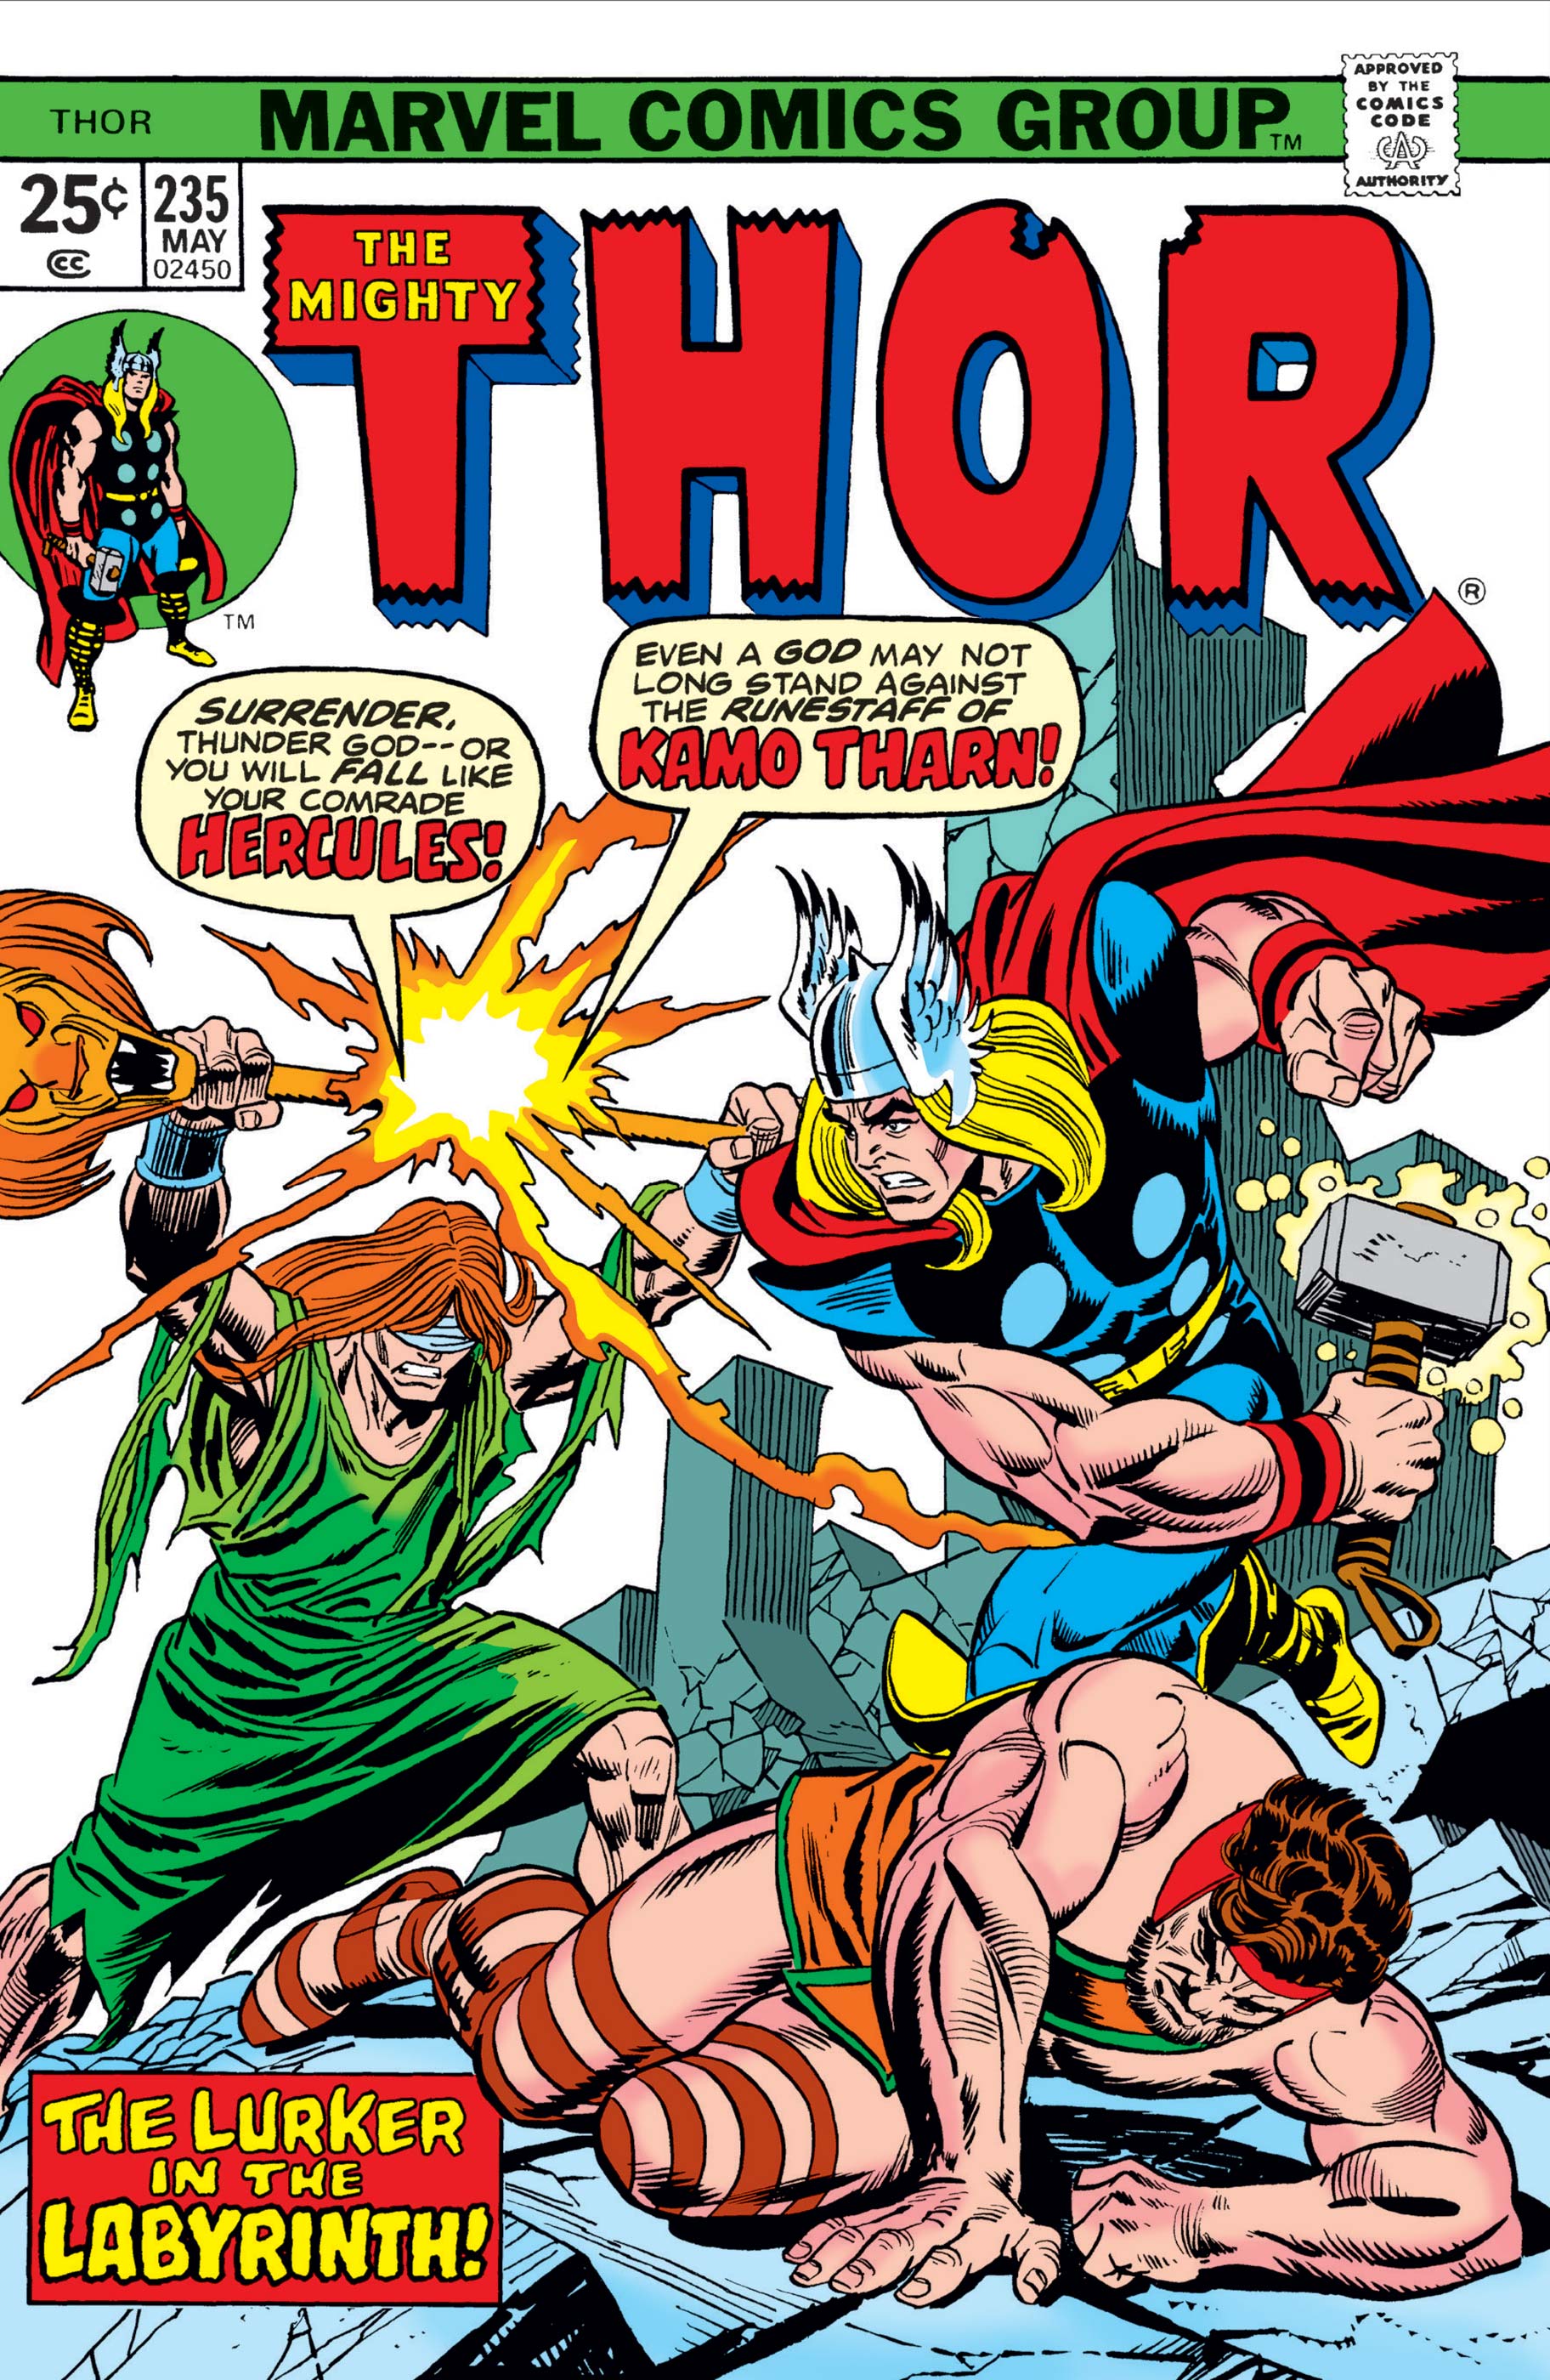 Thor (1966) #235